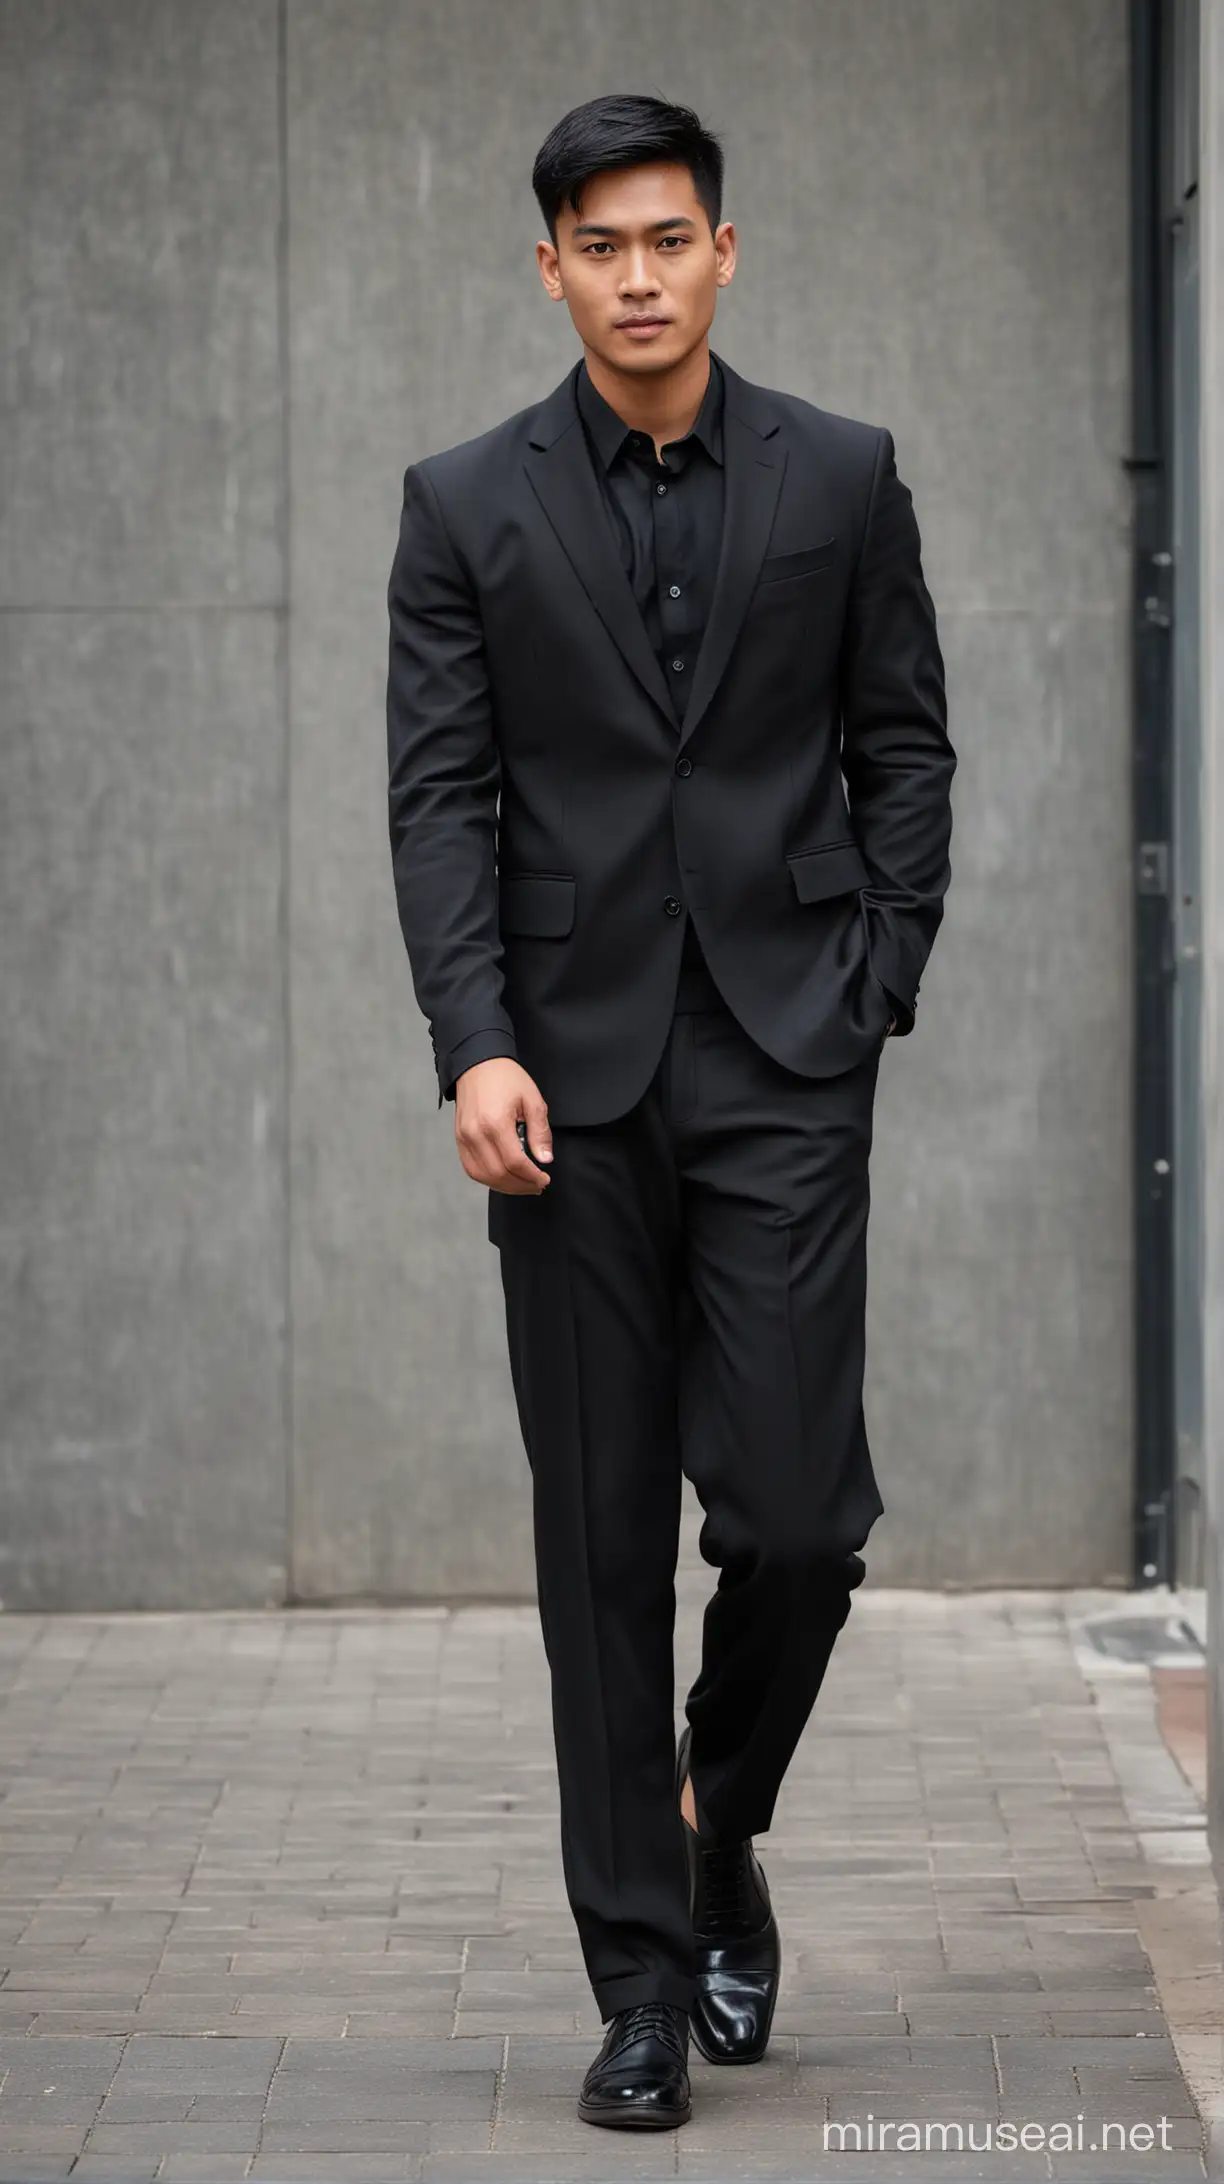 Serious Indonesian Man Walking in Black Suit